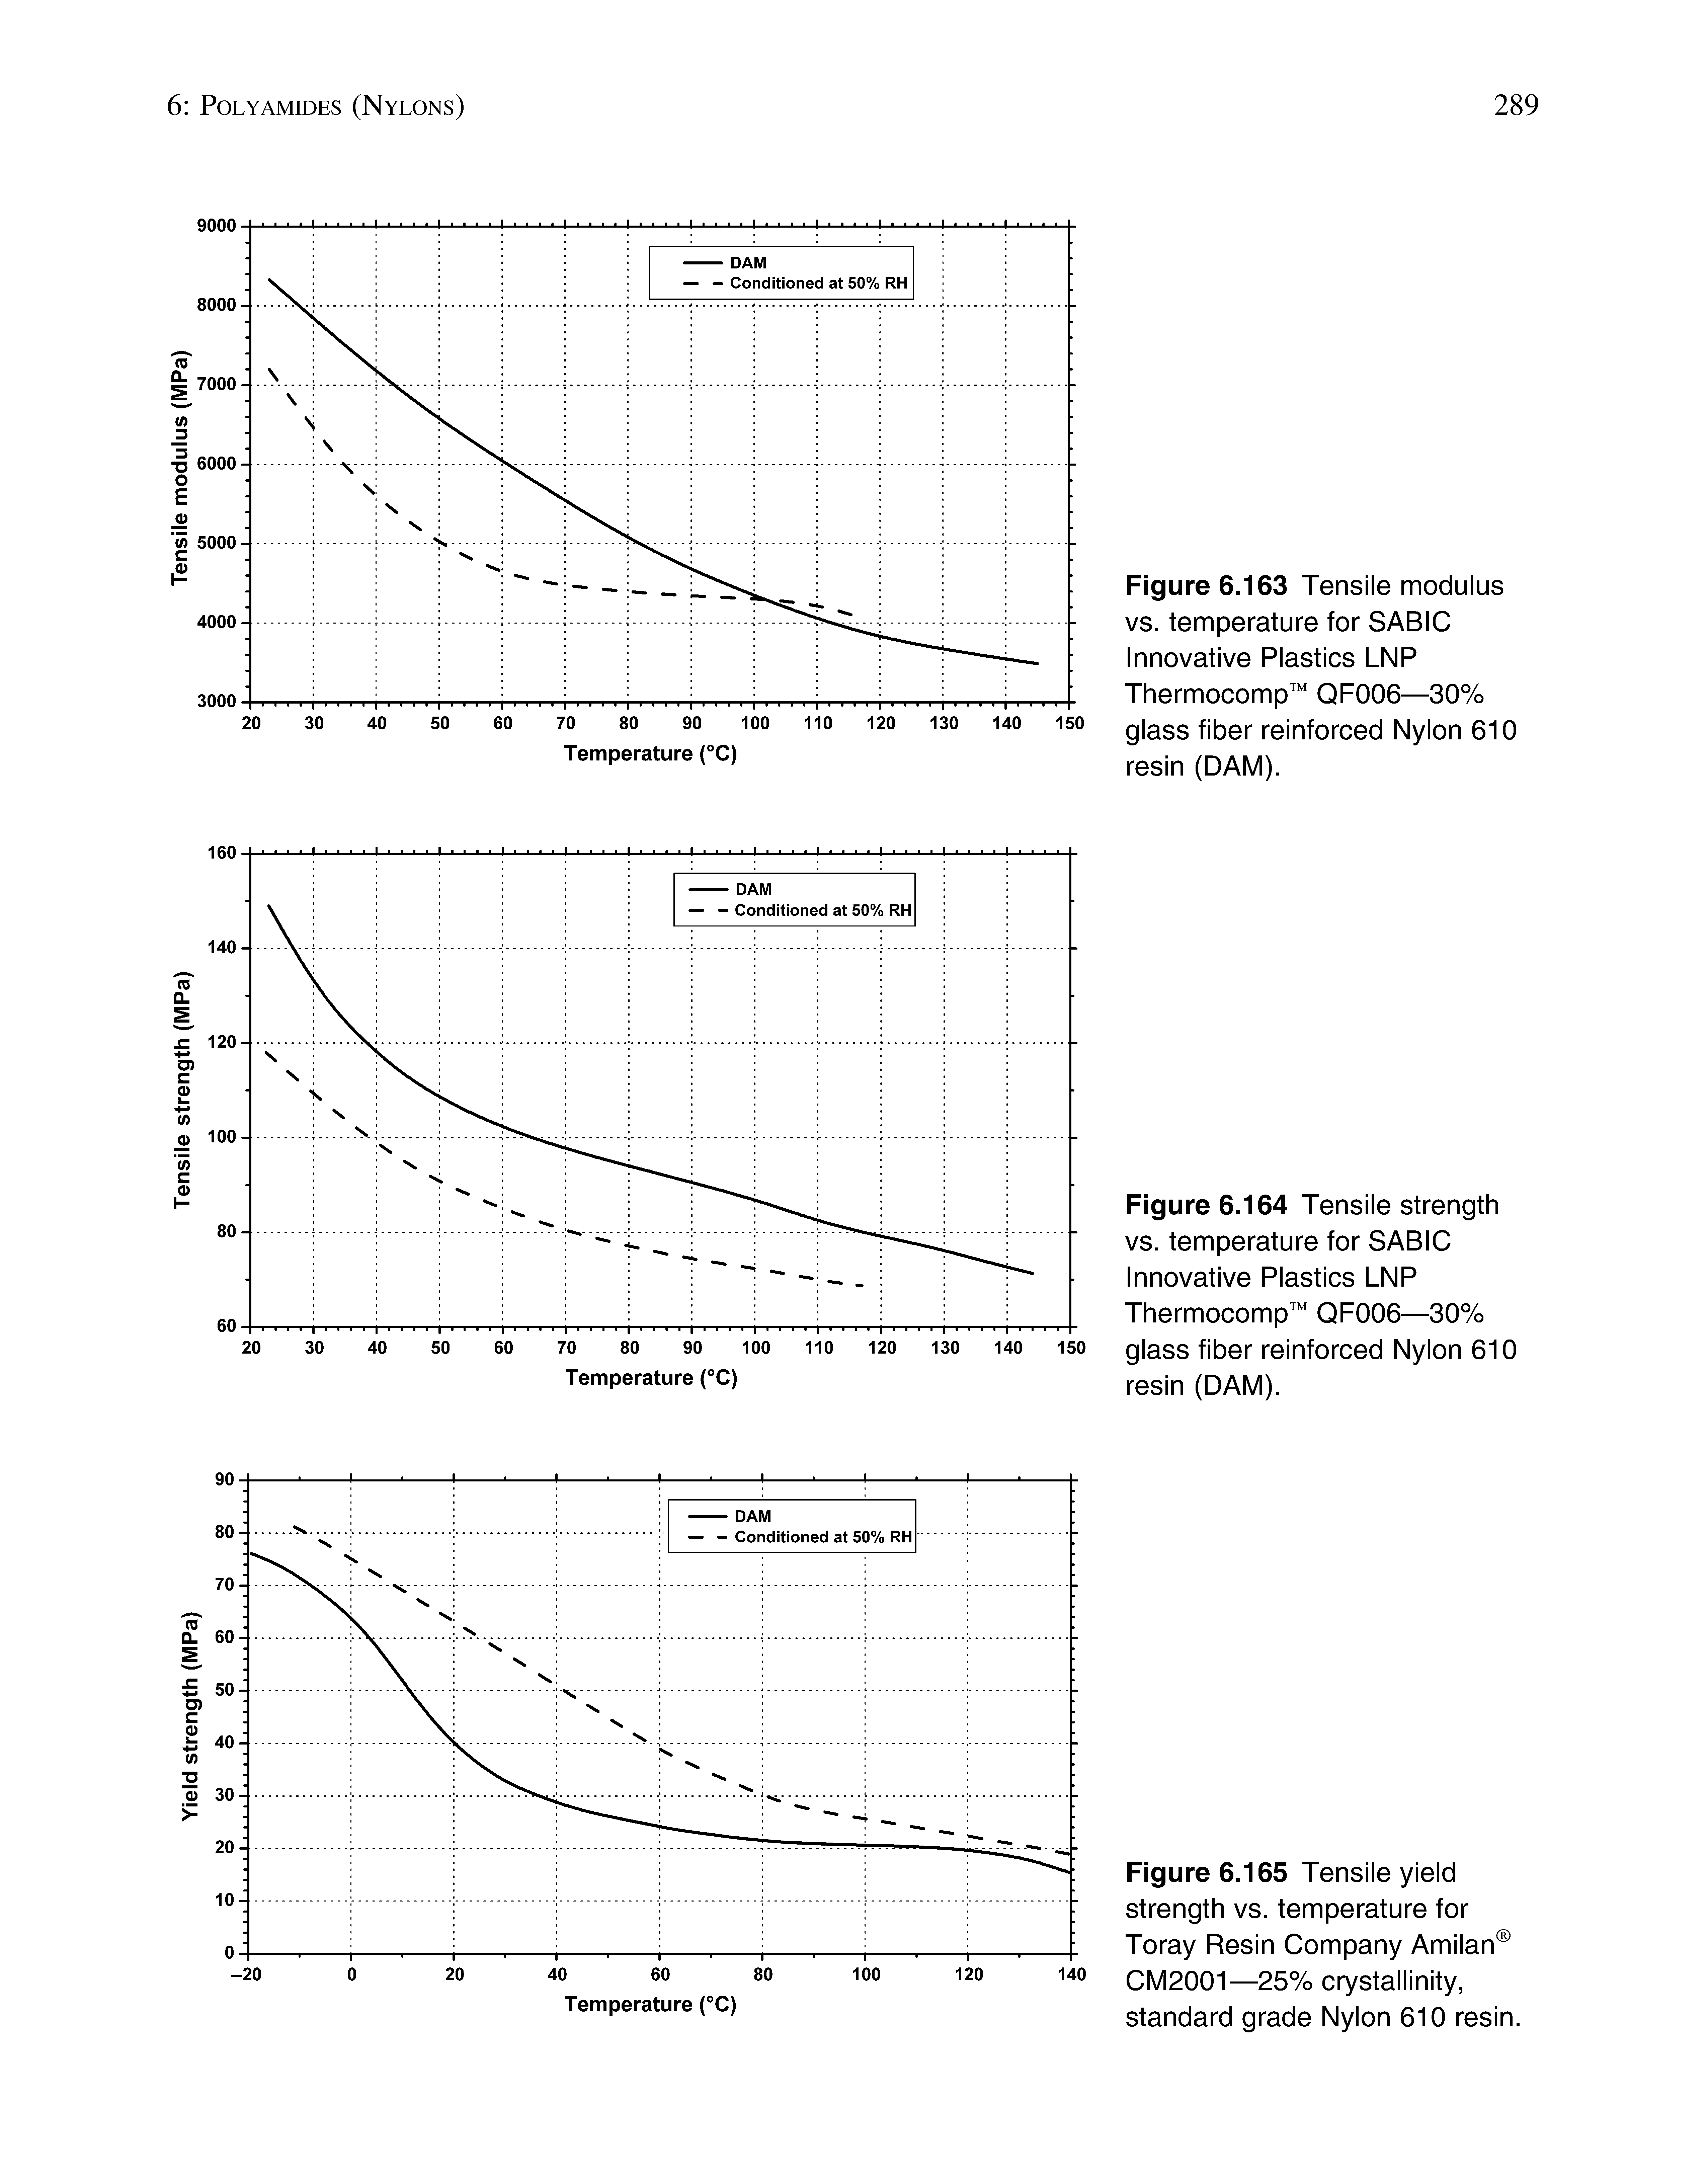 Figure 6.165 Tensile yield strength vs. temperature for Toray Resin Company Amilan CM2001—25% crystallinity, standard grade Nylon 610 resin.